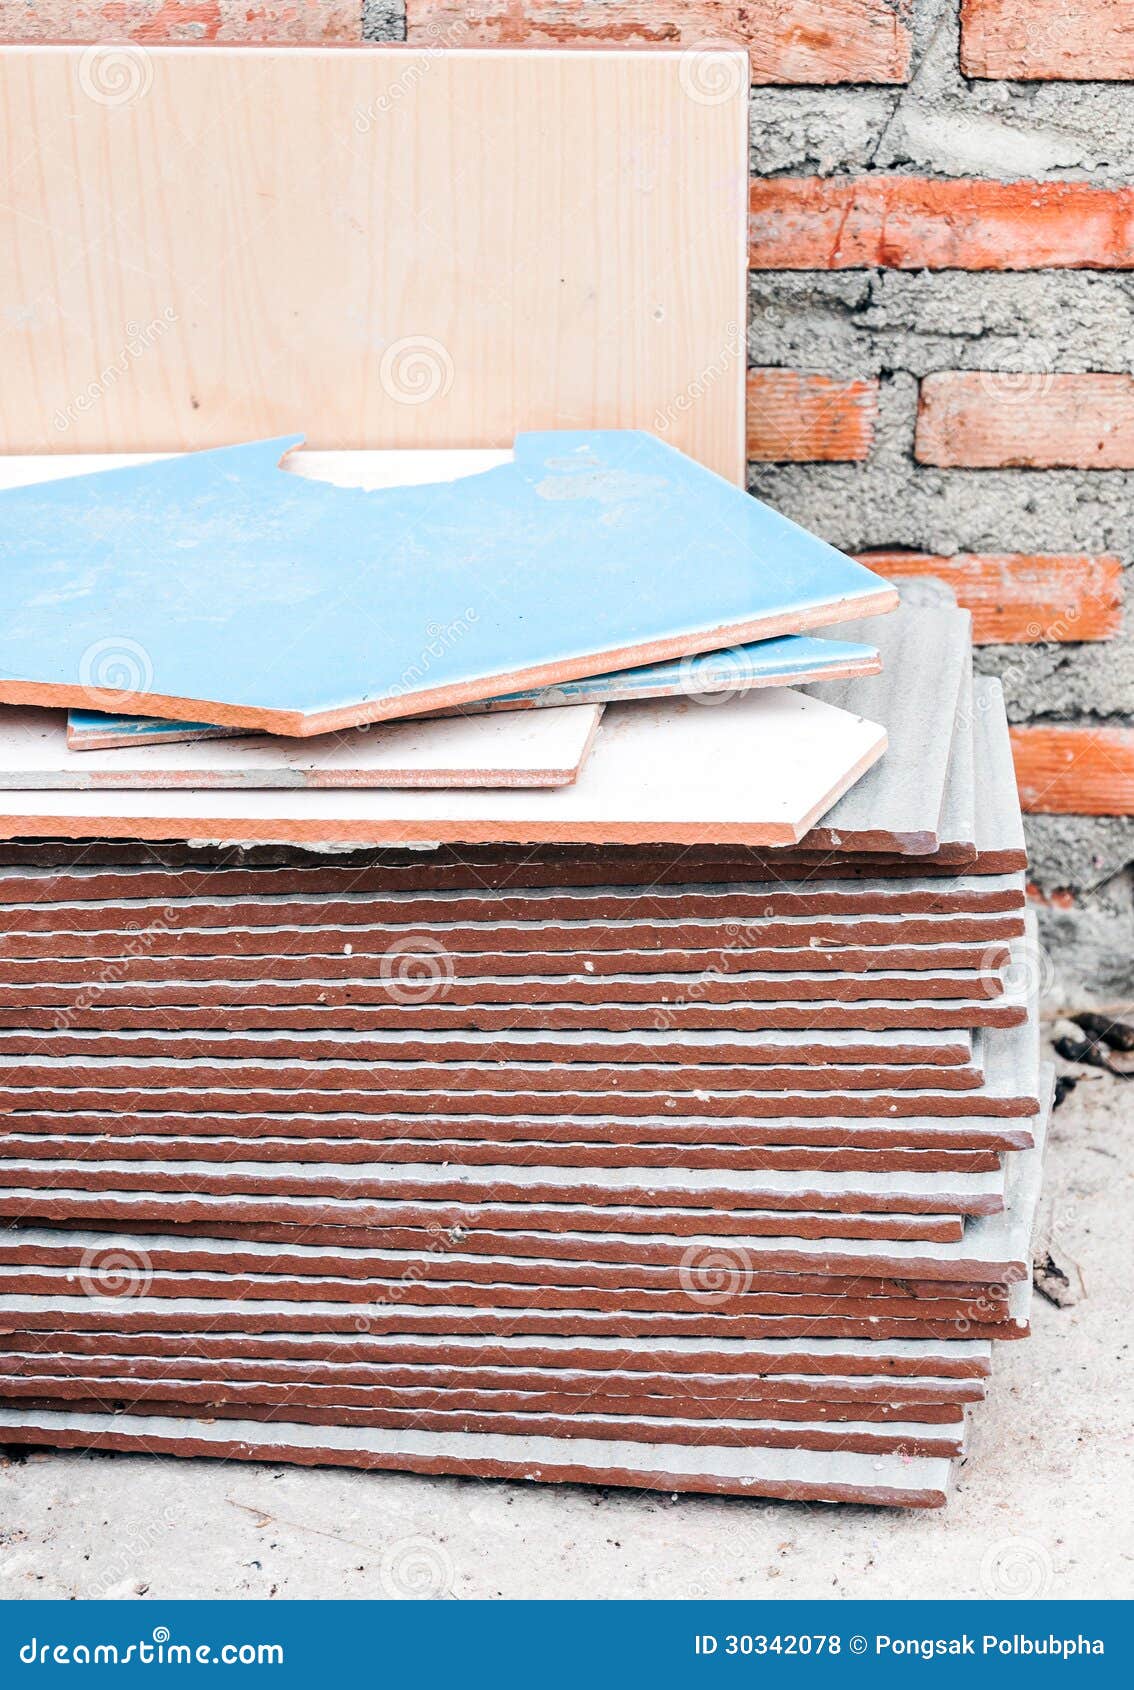 Orange tile stack stock photo. Image of material, mosaic - 30342078